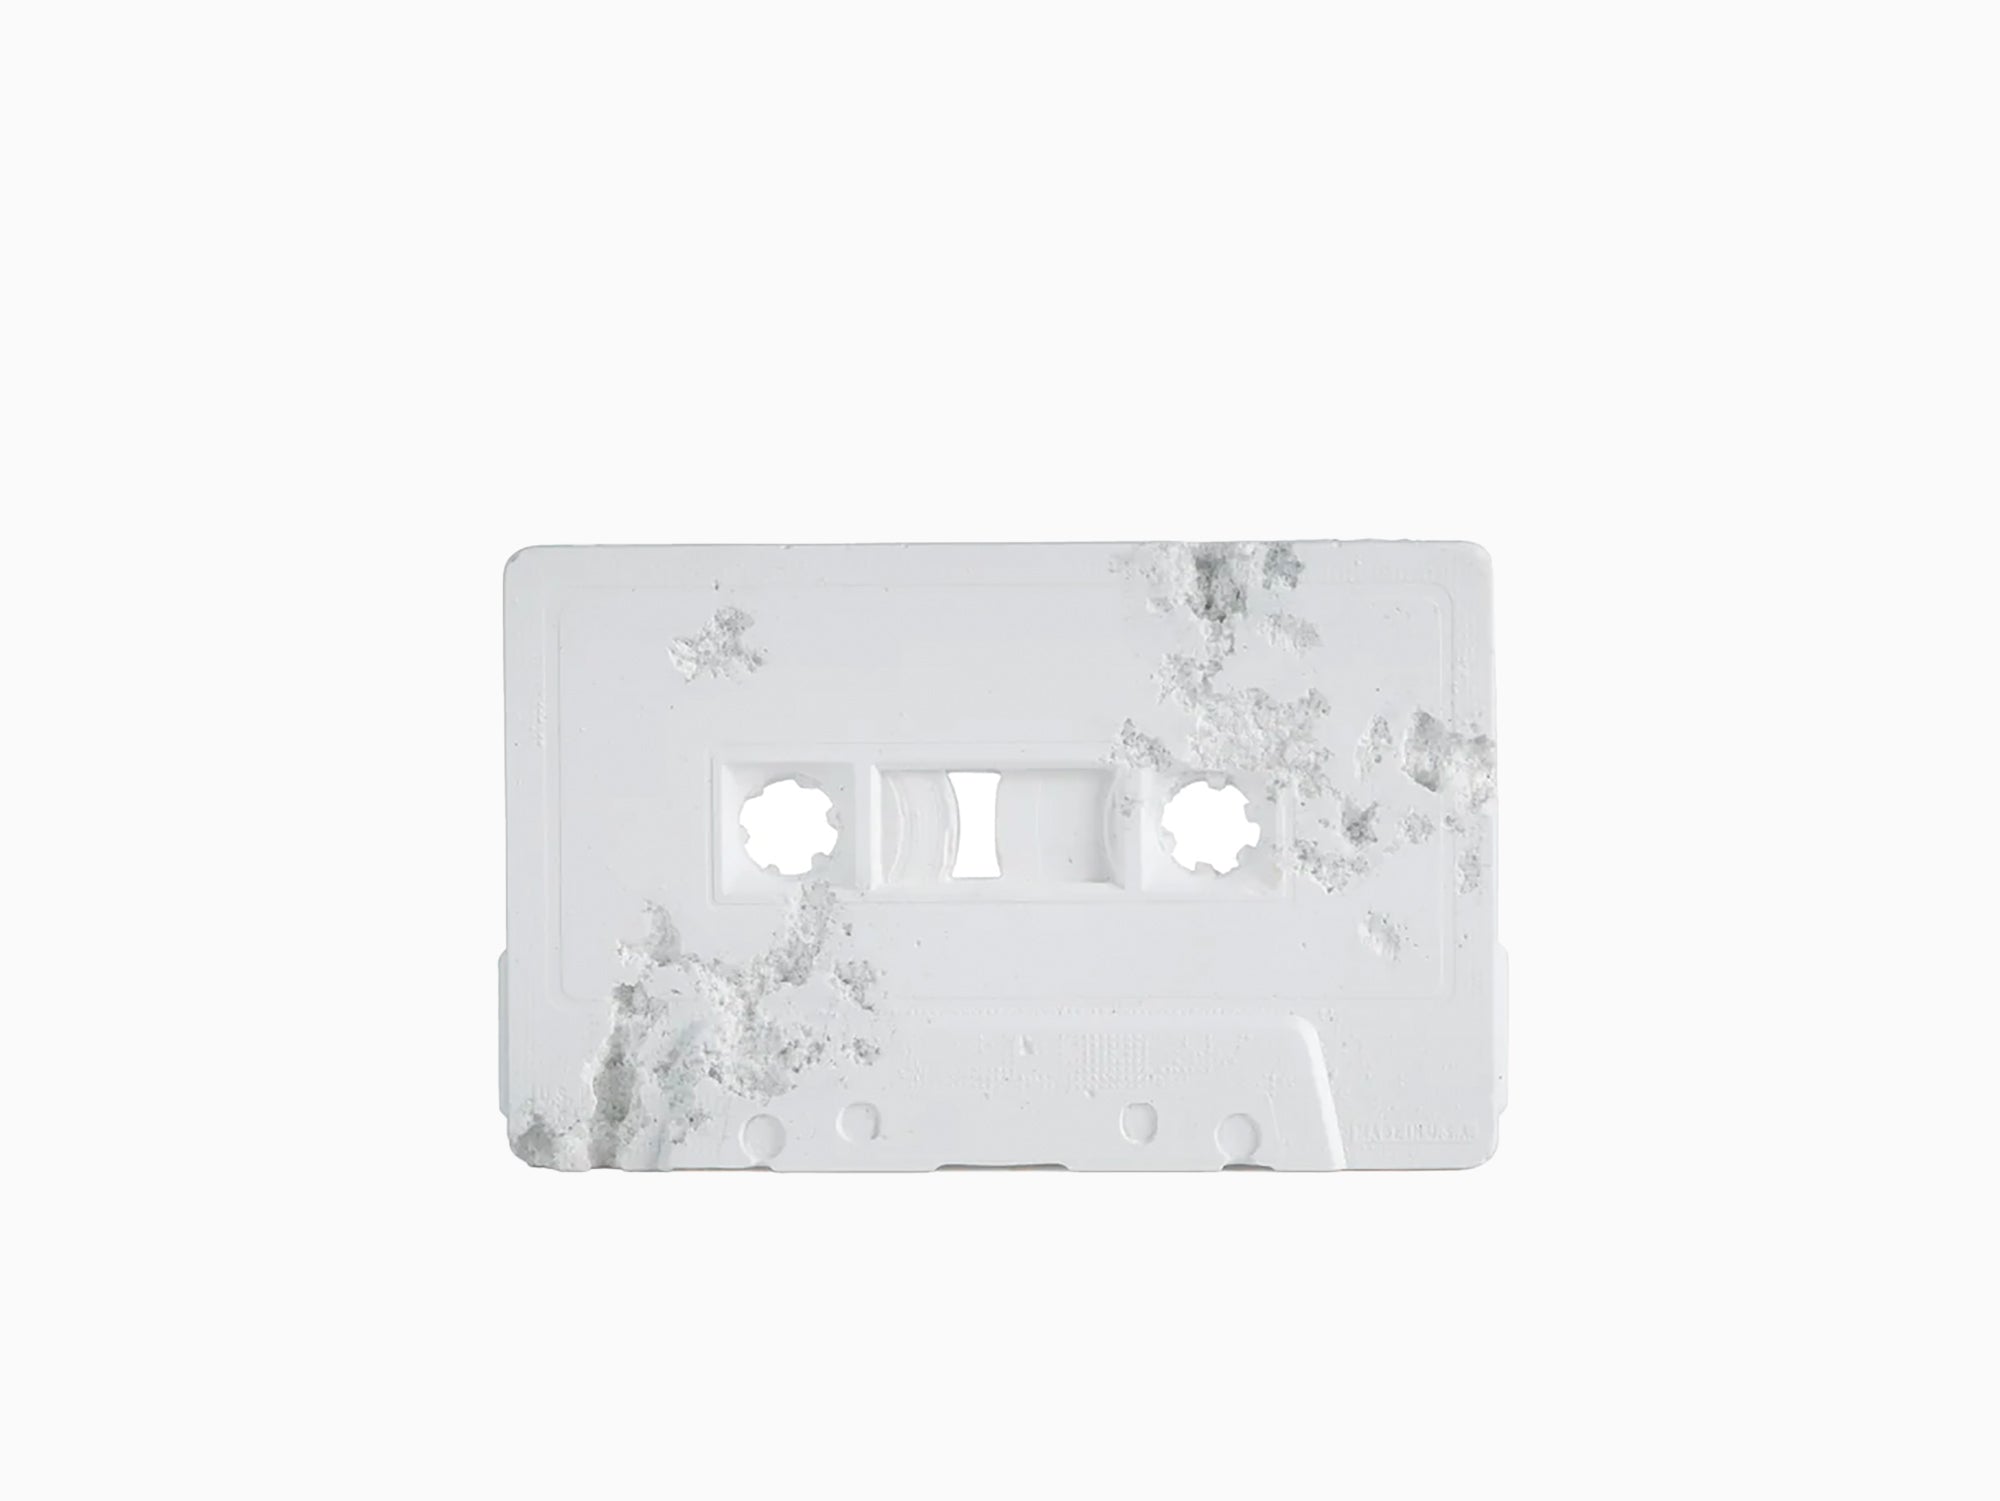 Daniel Arsham - Future Relic 04 (Cassette Tape)